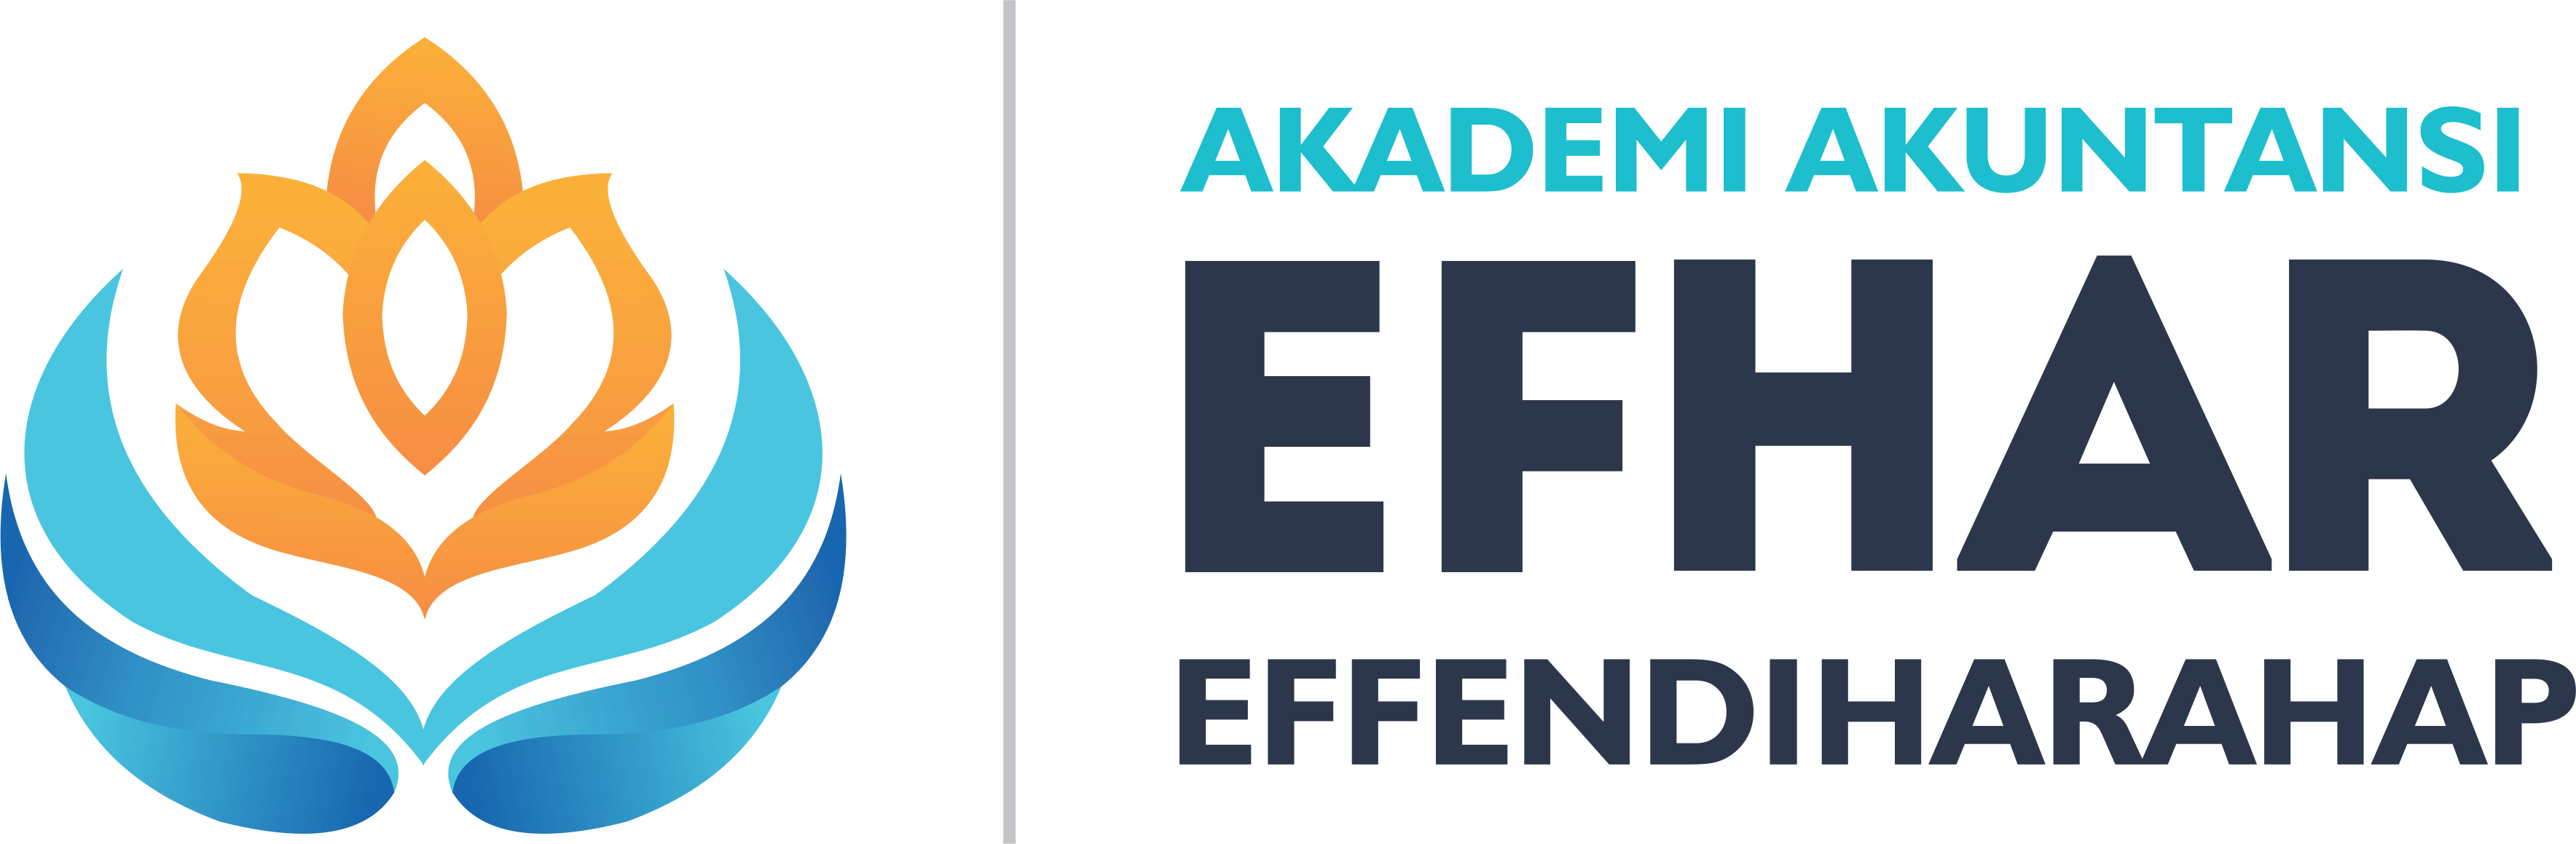 logo Akademi Akuntansi Effendi Harahap